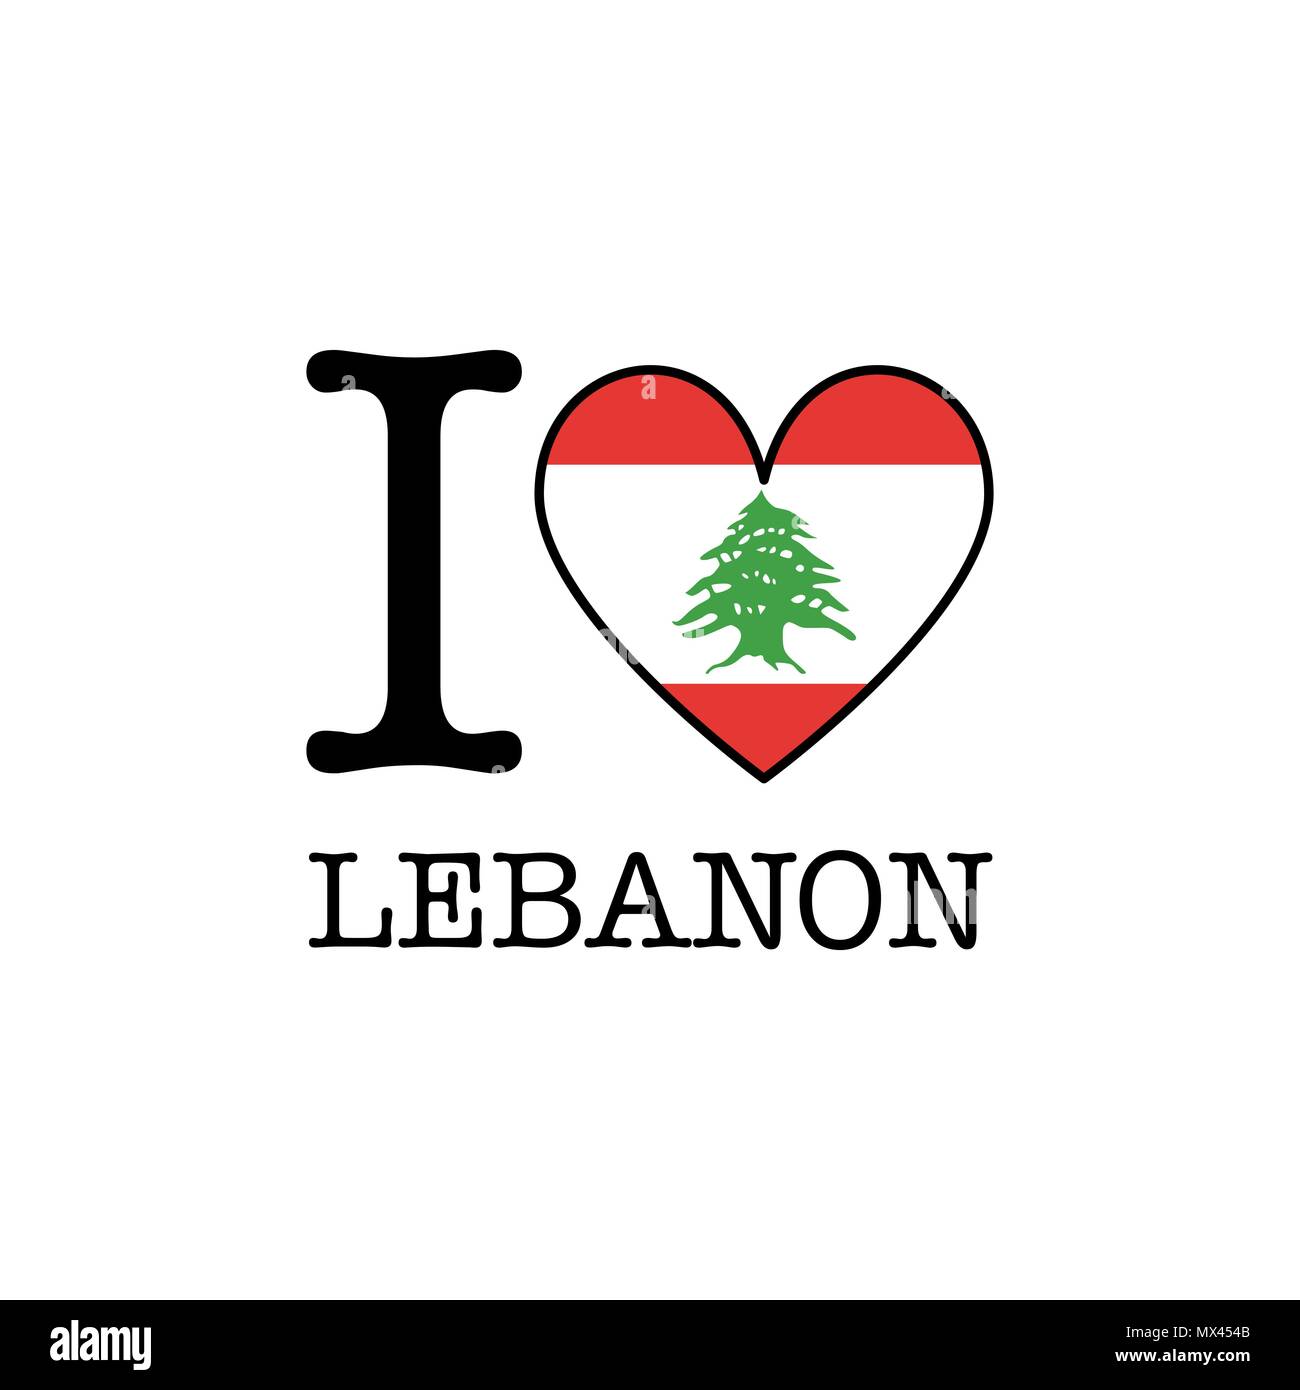 Eight social enterprises making a difference in Lebanon - Centre for Social  Innovation